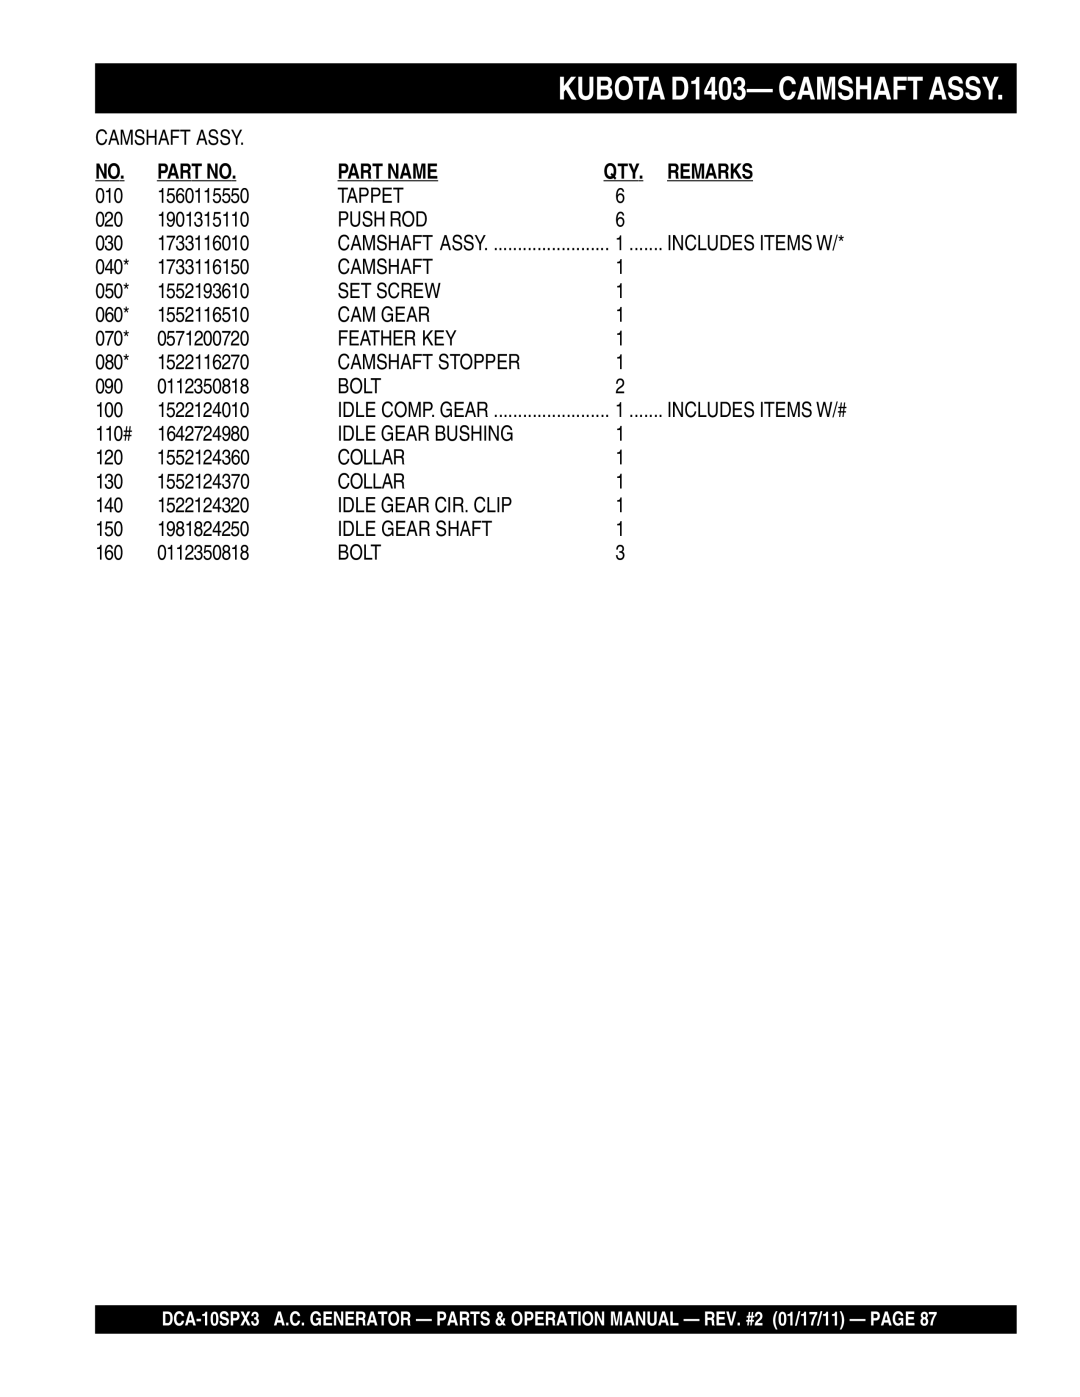 Multiquip DCA10SPX3 manual KUBOTA D1403- CAMSHAFT ASSY, 110#, Includes Items W/# 